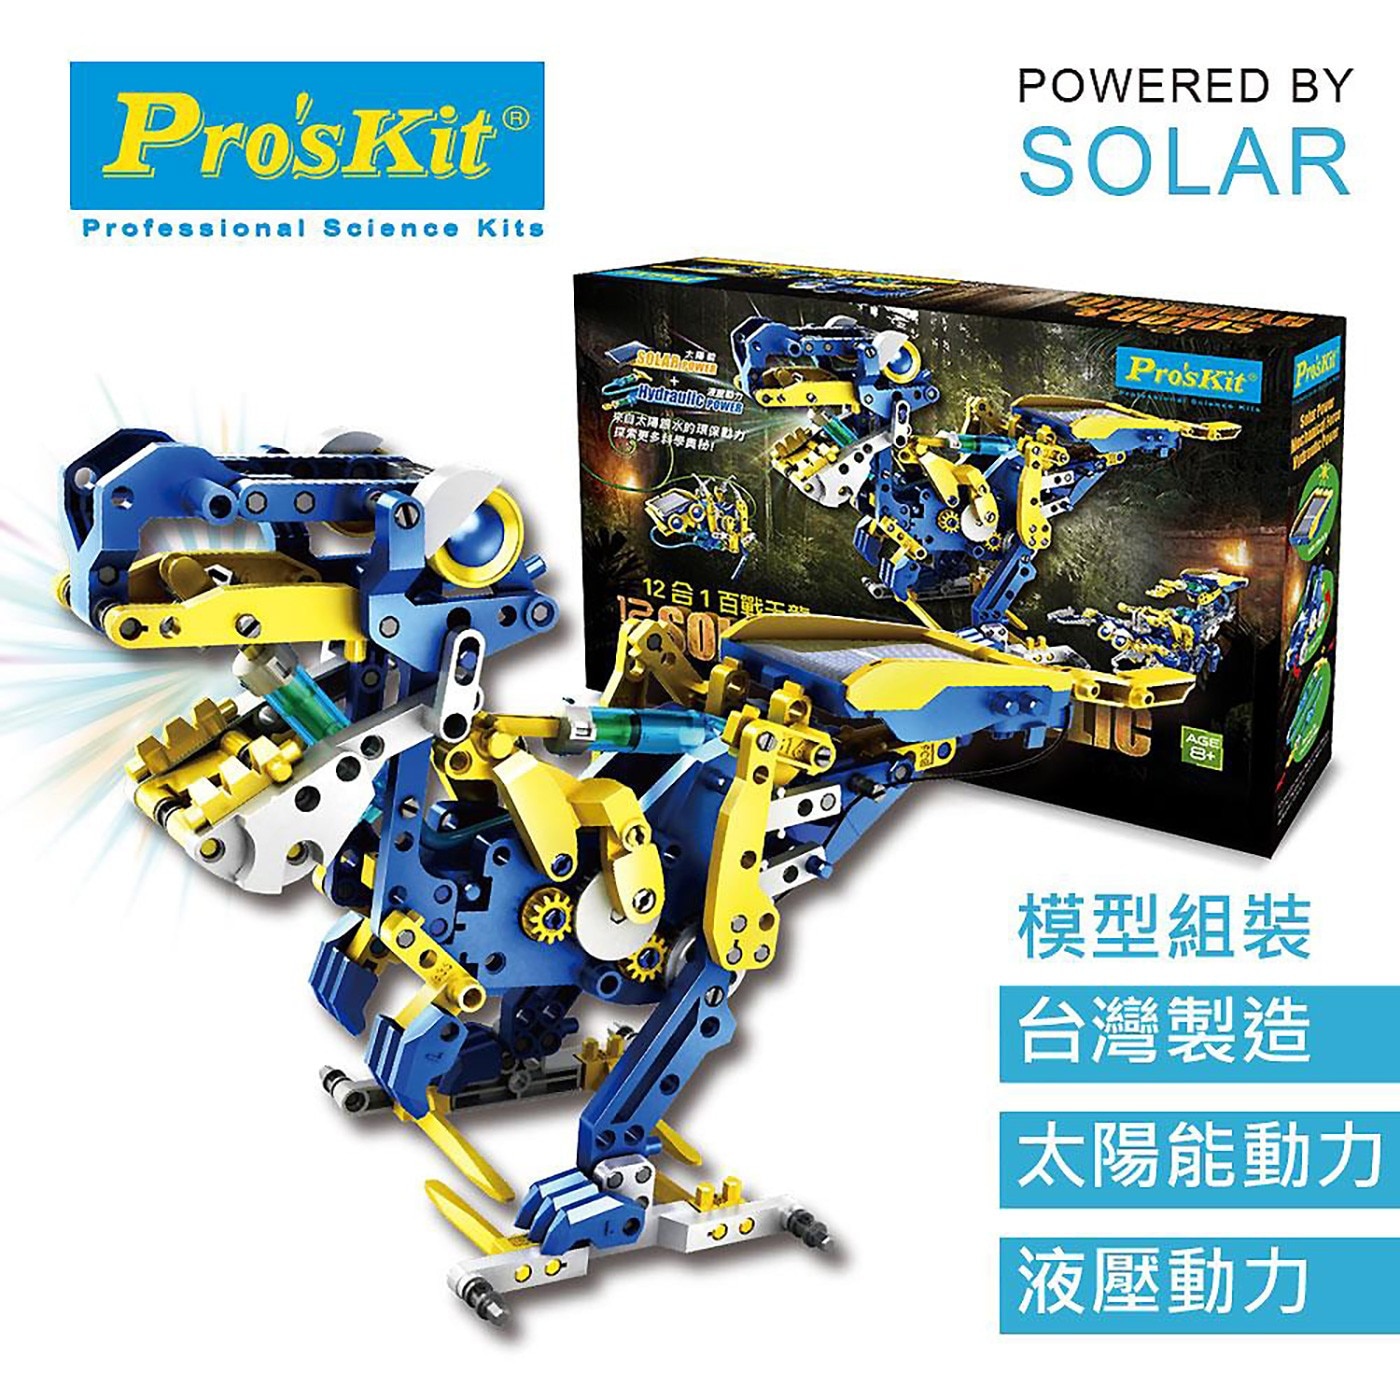 Pro'sKit 寶工 12合1百戰天龍模型組裝台灣製造太陽能動力液壓動力科學玩具